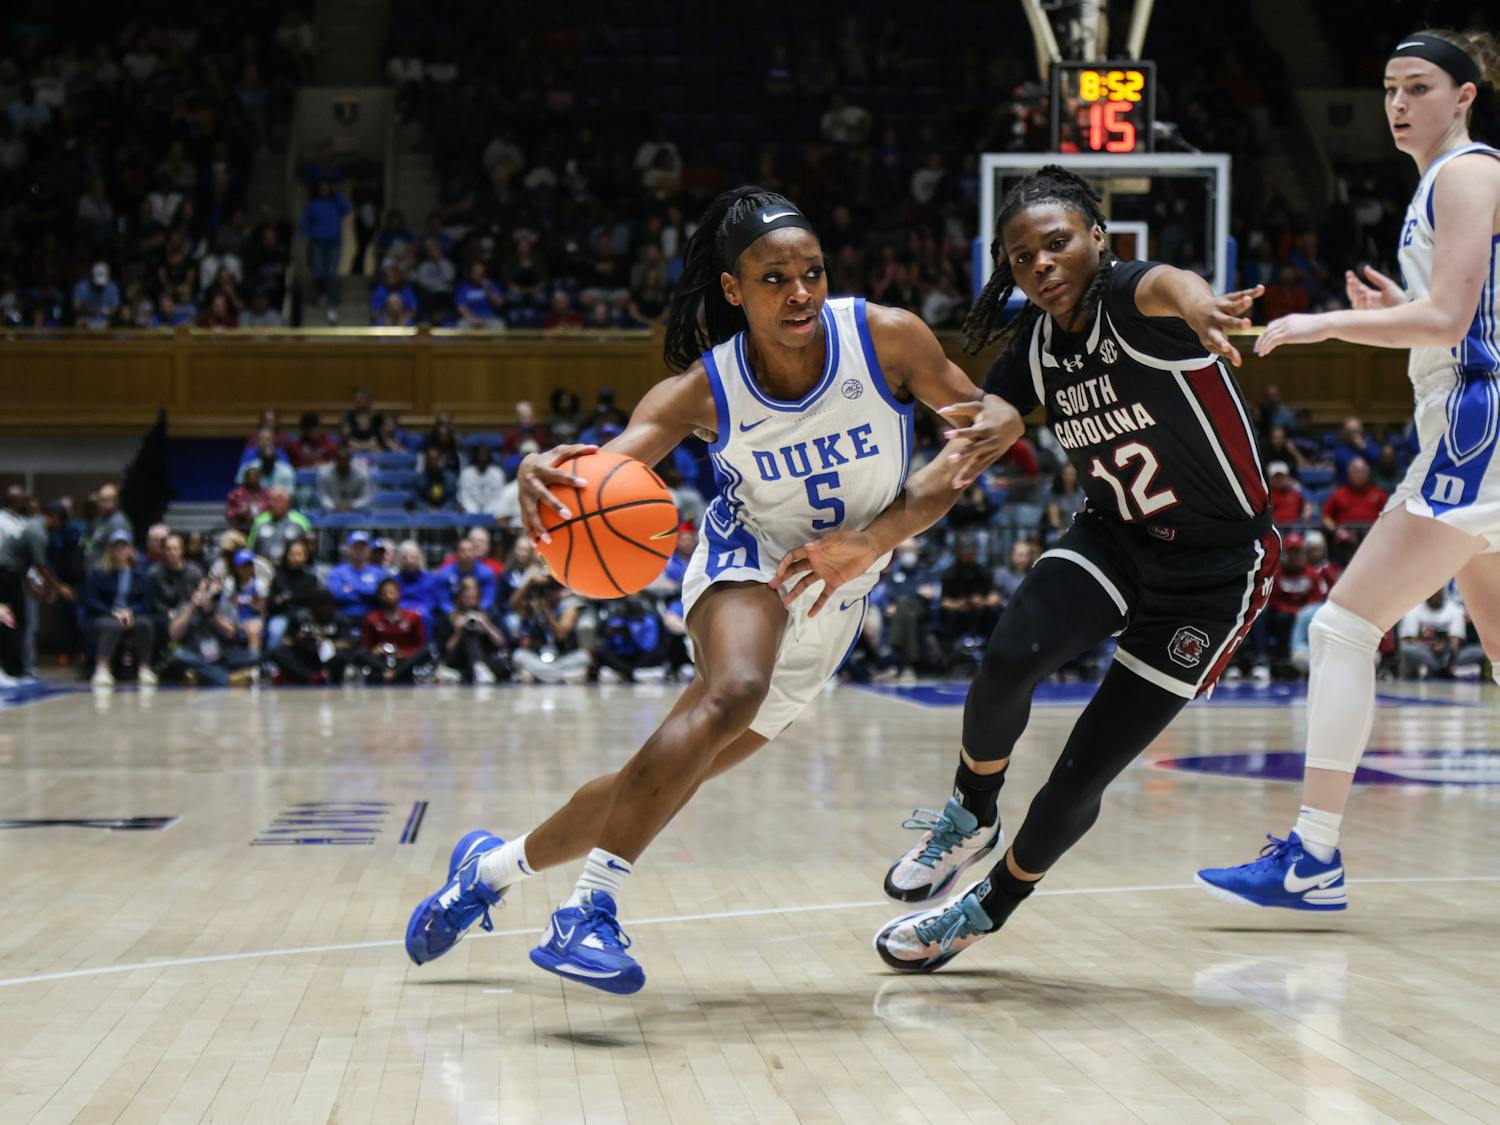 Scenes from Duke women's basketball's match against South Carolina